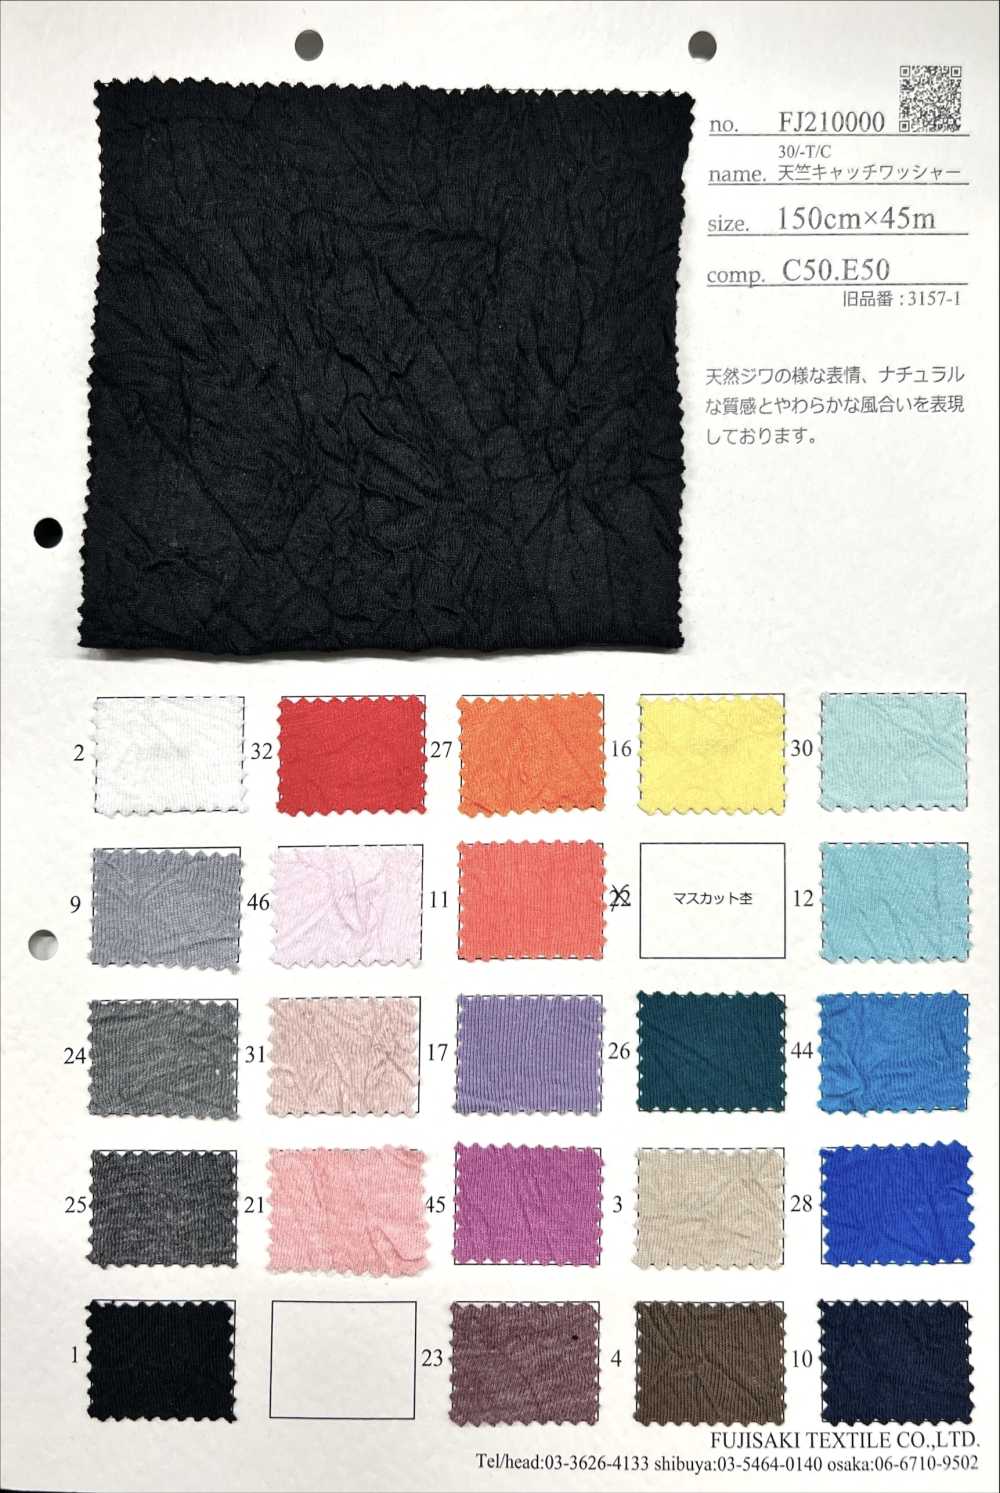 FJ210000 Xử Lý Máy Giặt Bắt Vải Vải Cotton Tenjiku 30/-T/C Fujisaki Textile